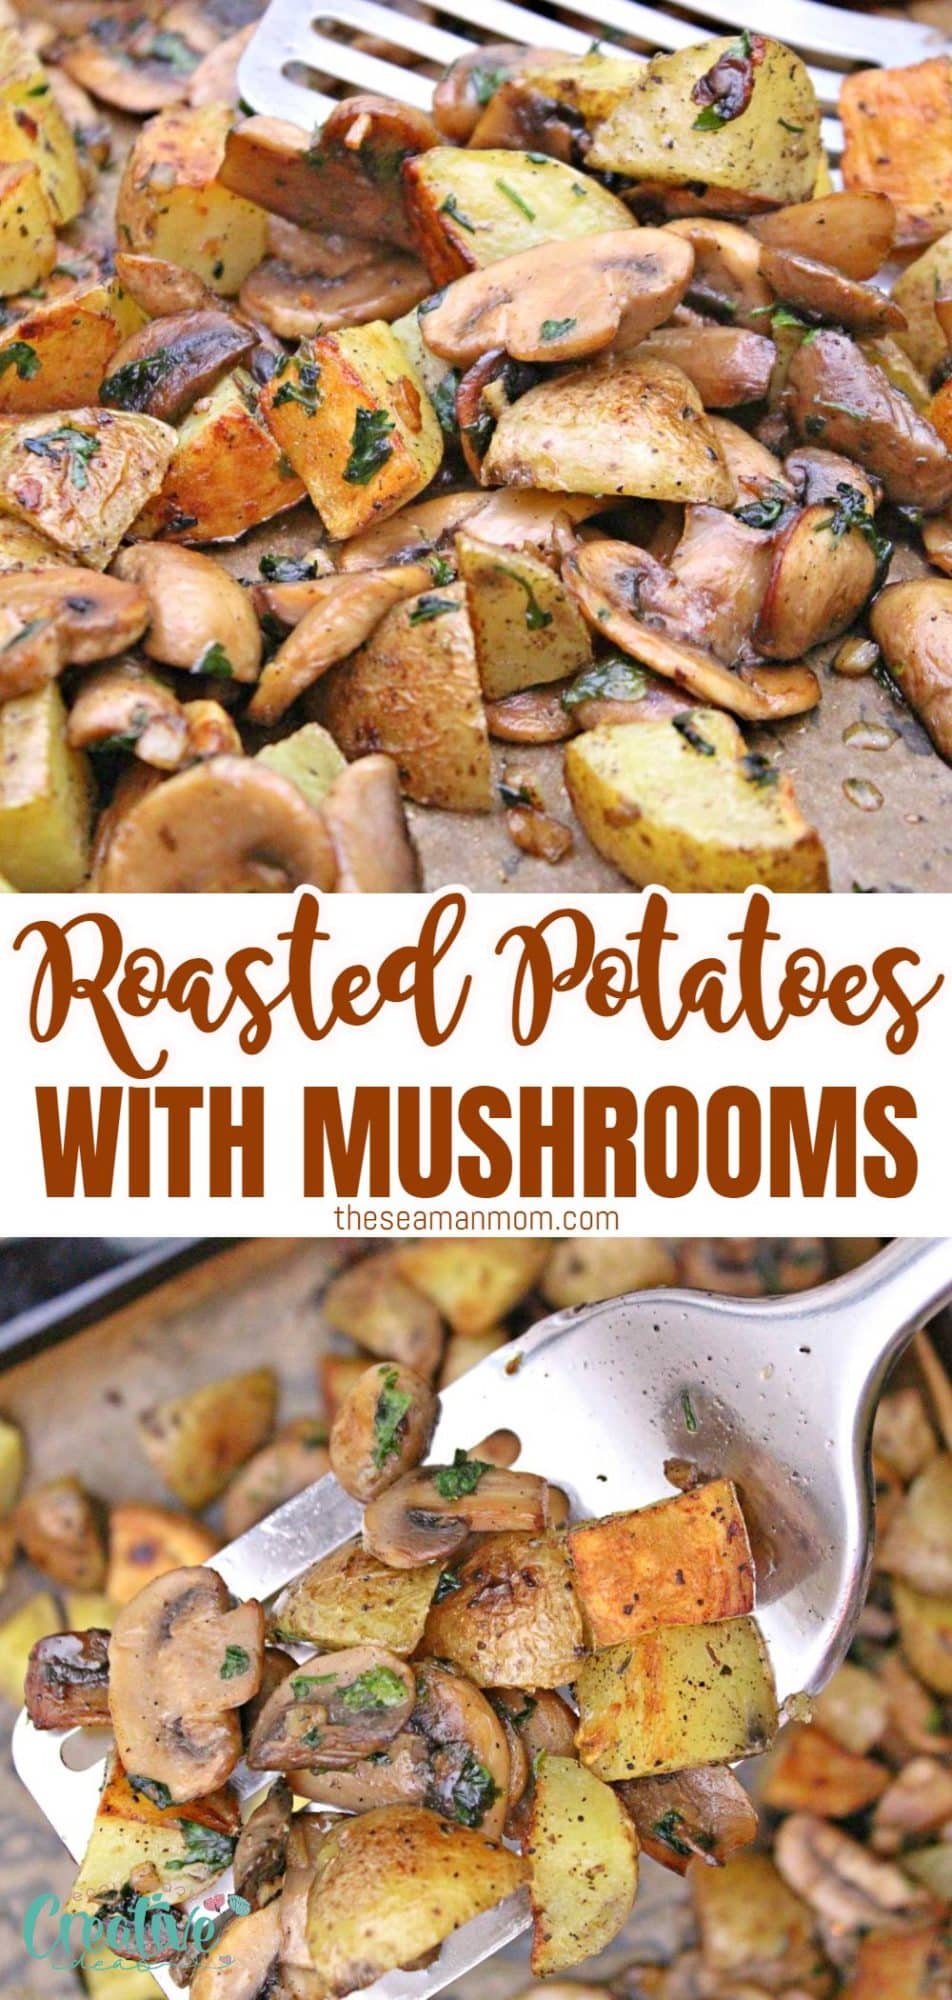 Roasted potatoes with mushrooms